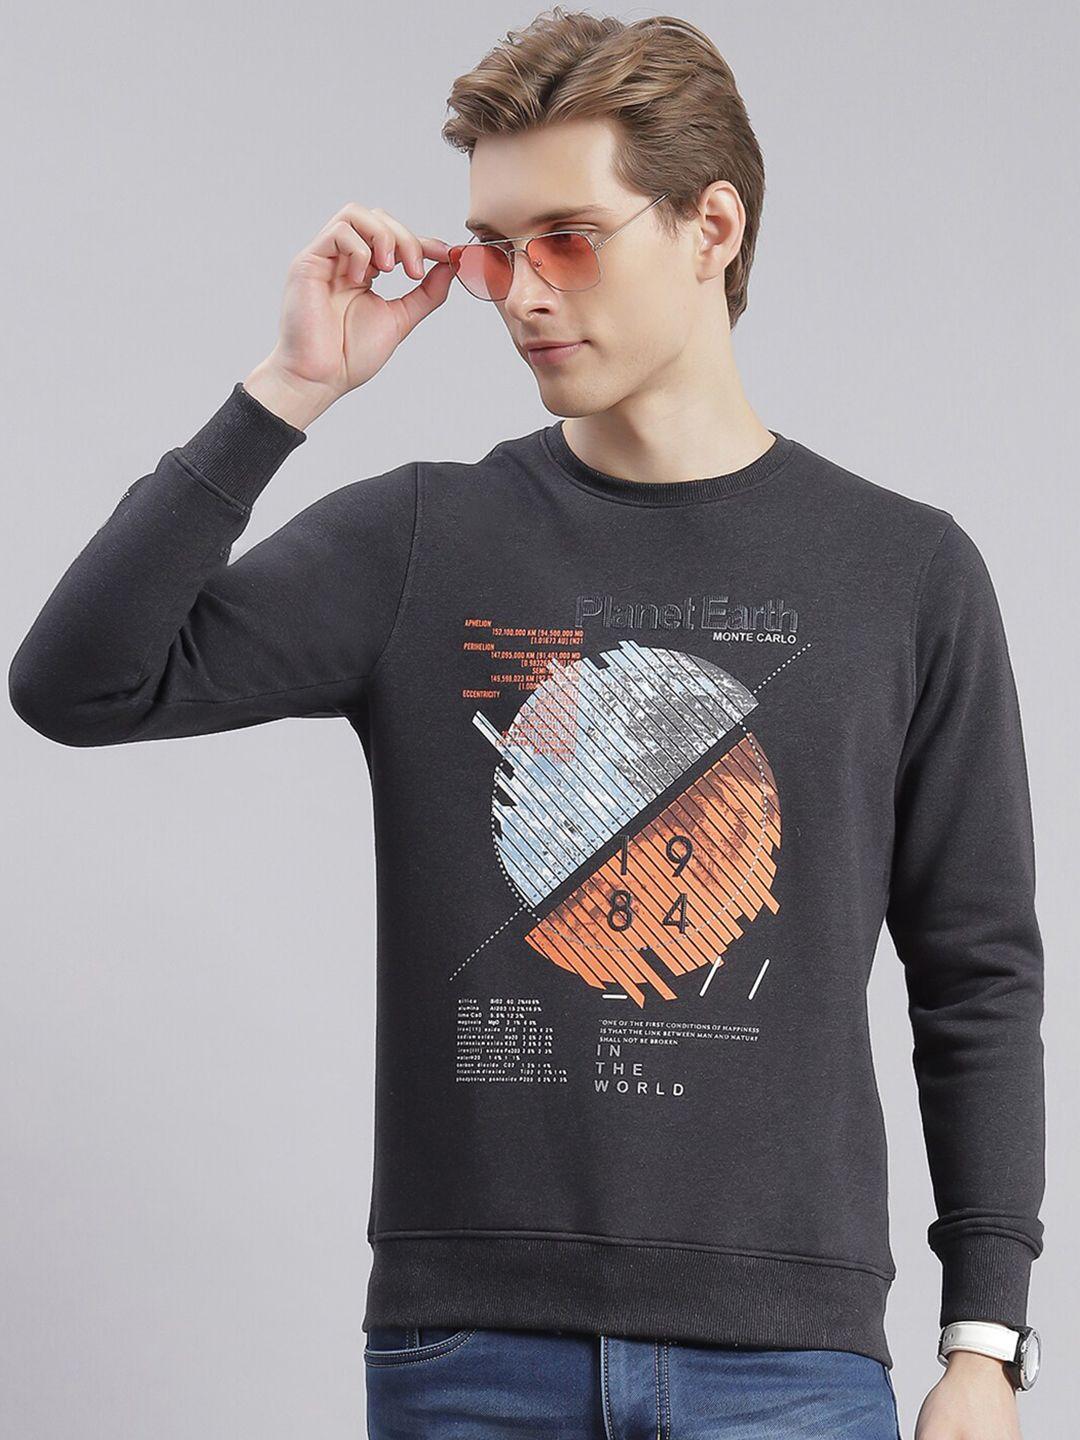 monte carlo graphic printed cotton pullover sweatshirt